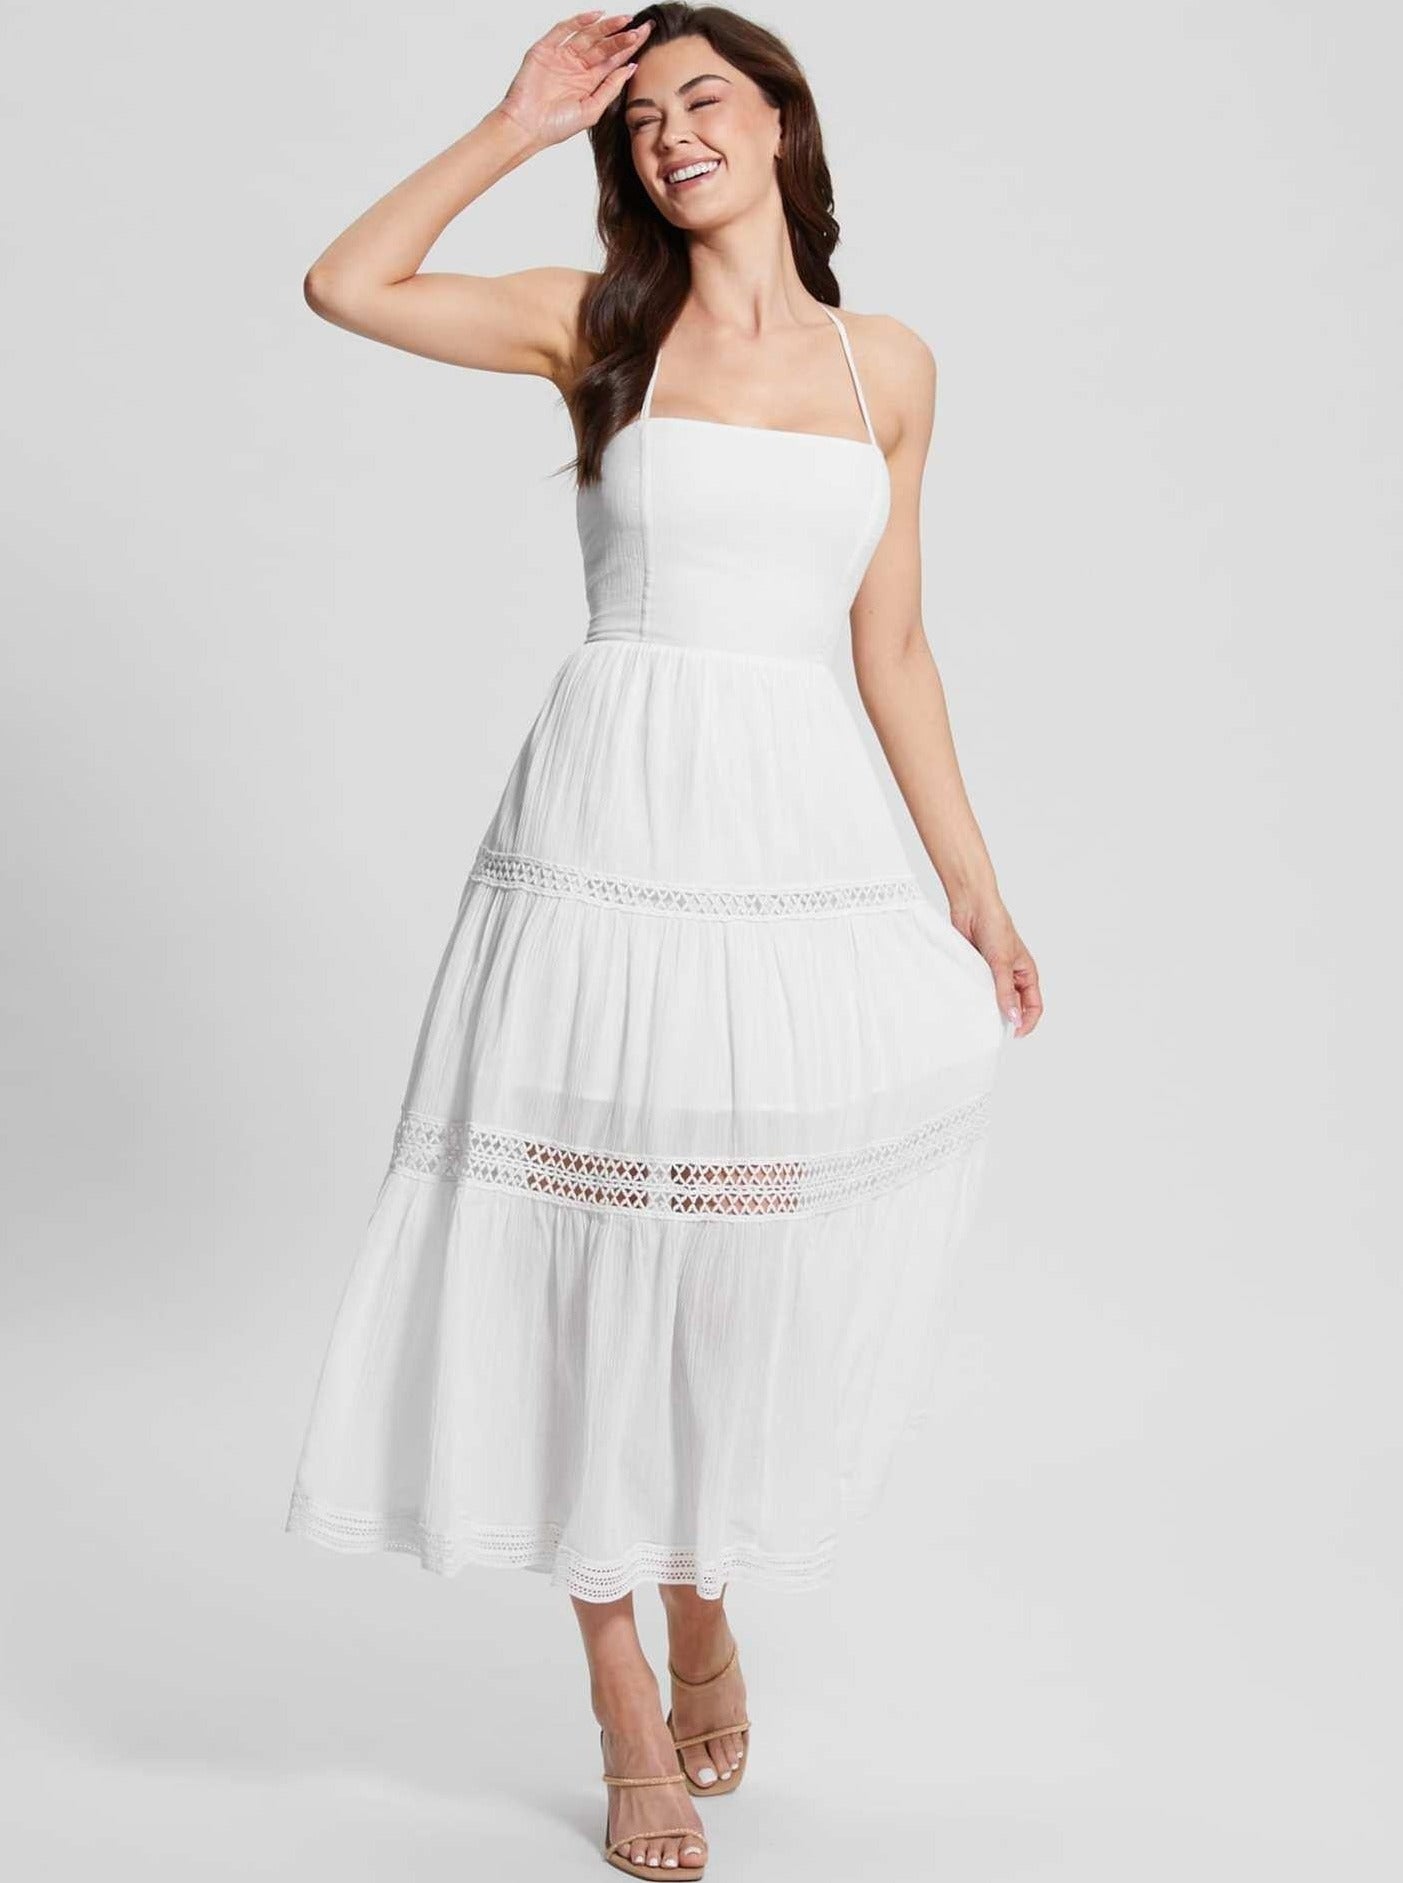 Weißes elegantes ärmelloses rückenfreies langes Kleid